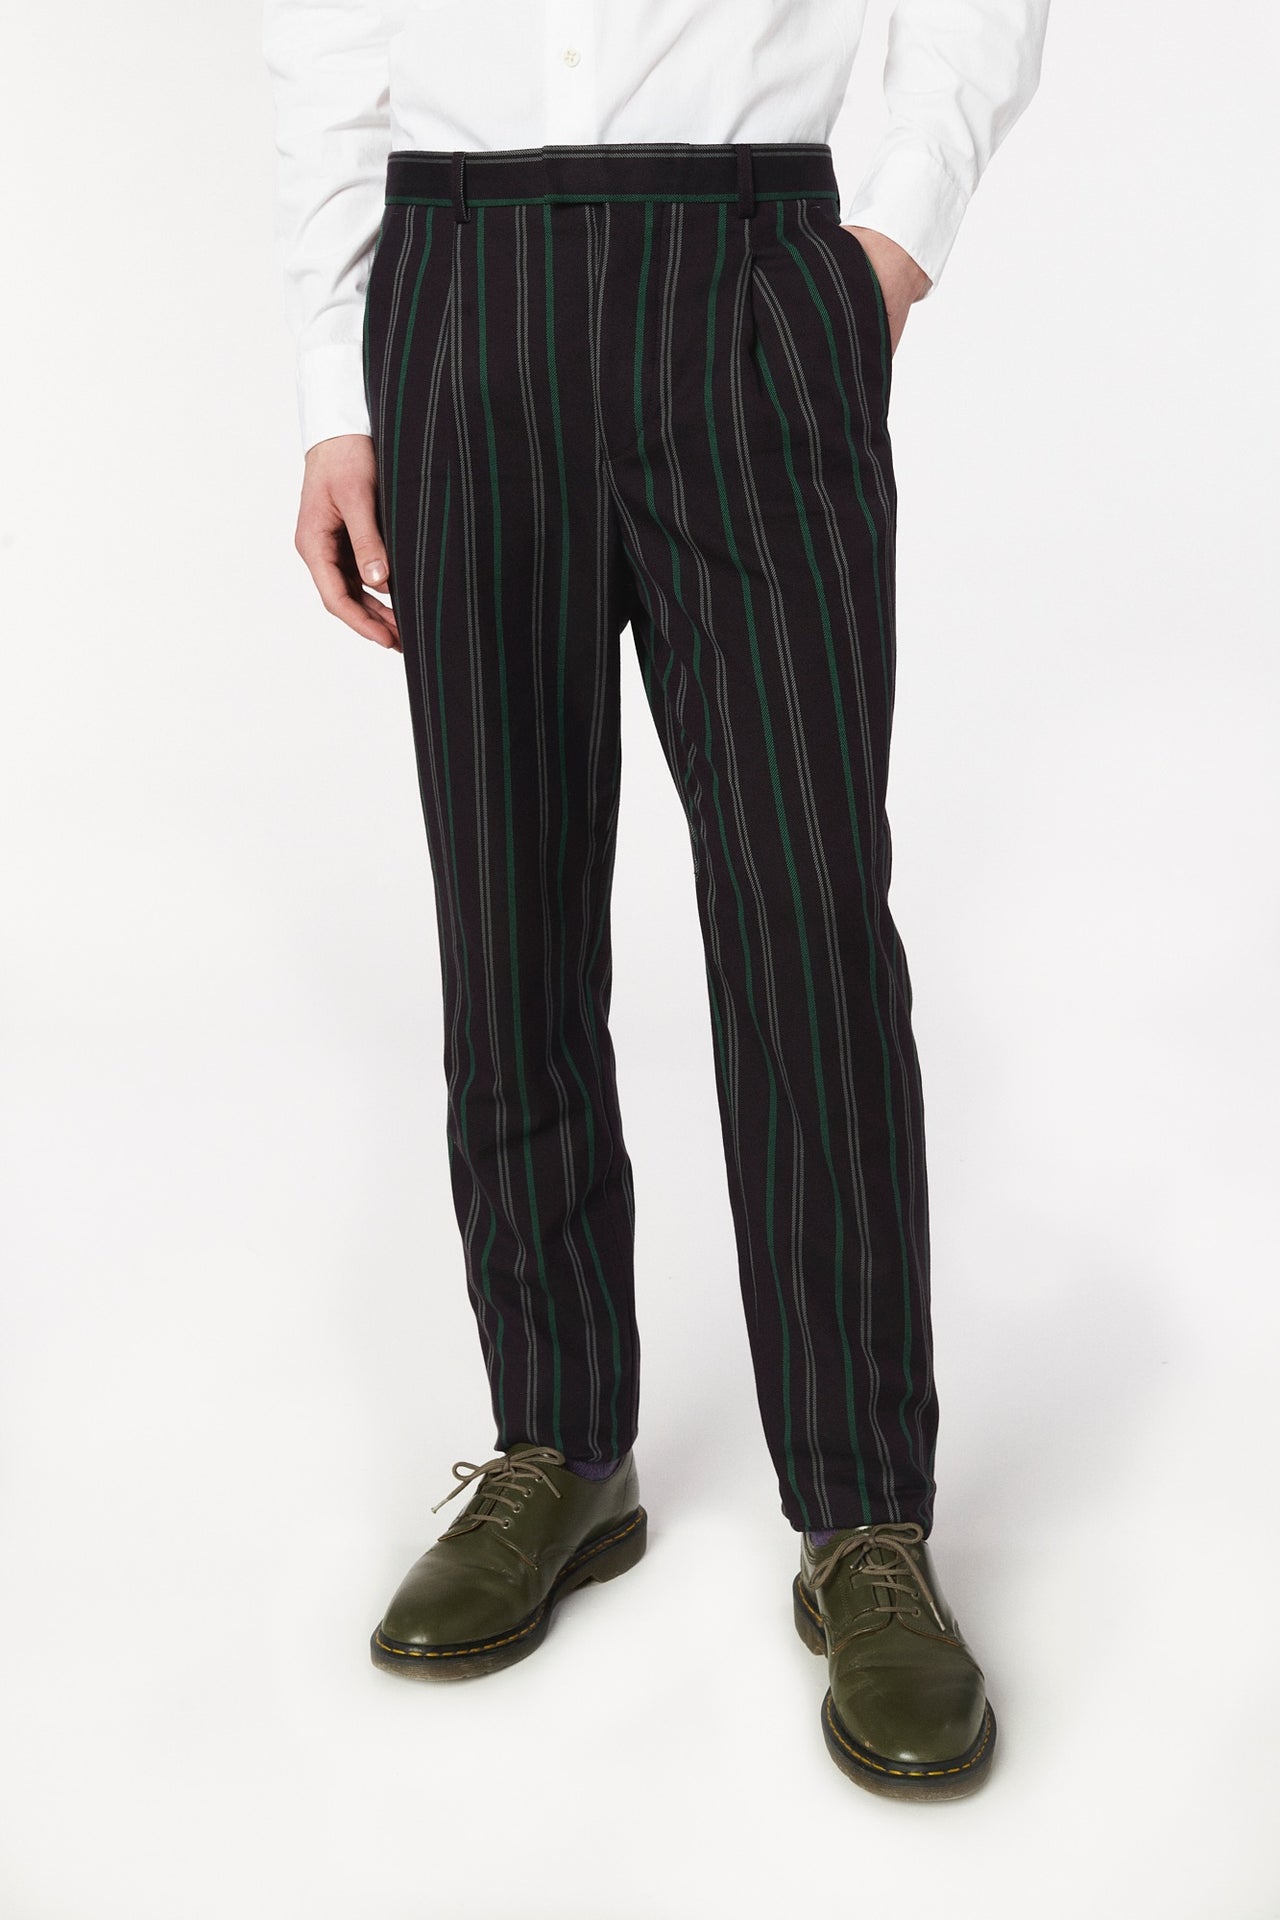 Bohemian Trousers in a Purple and Emerald Green Stripe Fine Italian Cotton